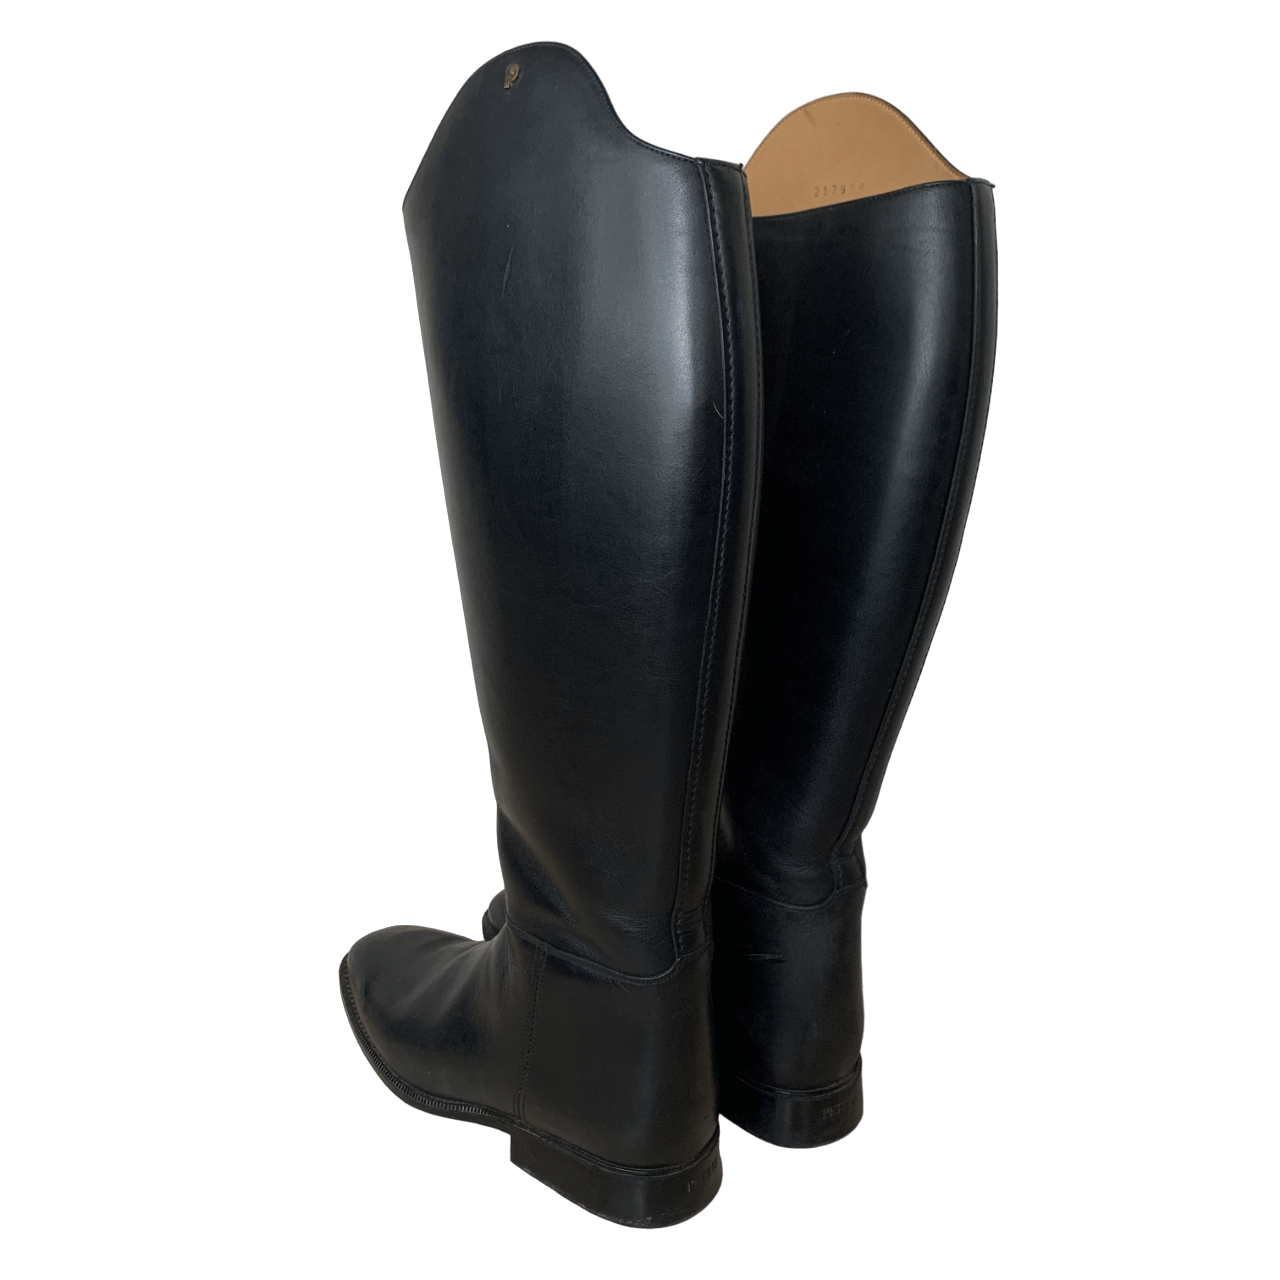 Petrie Custom 'Elegance' Dressage Boots in Black - EU41 (US 8/9)